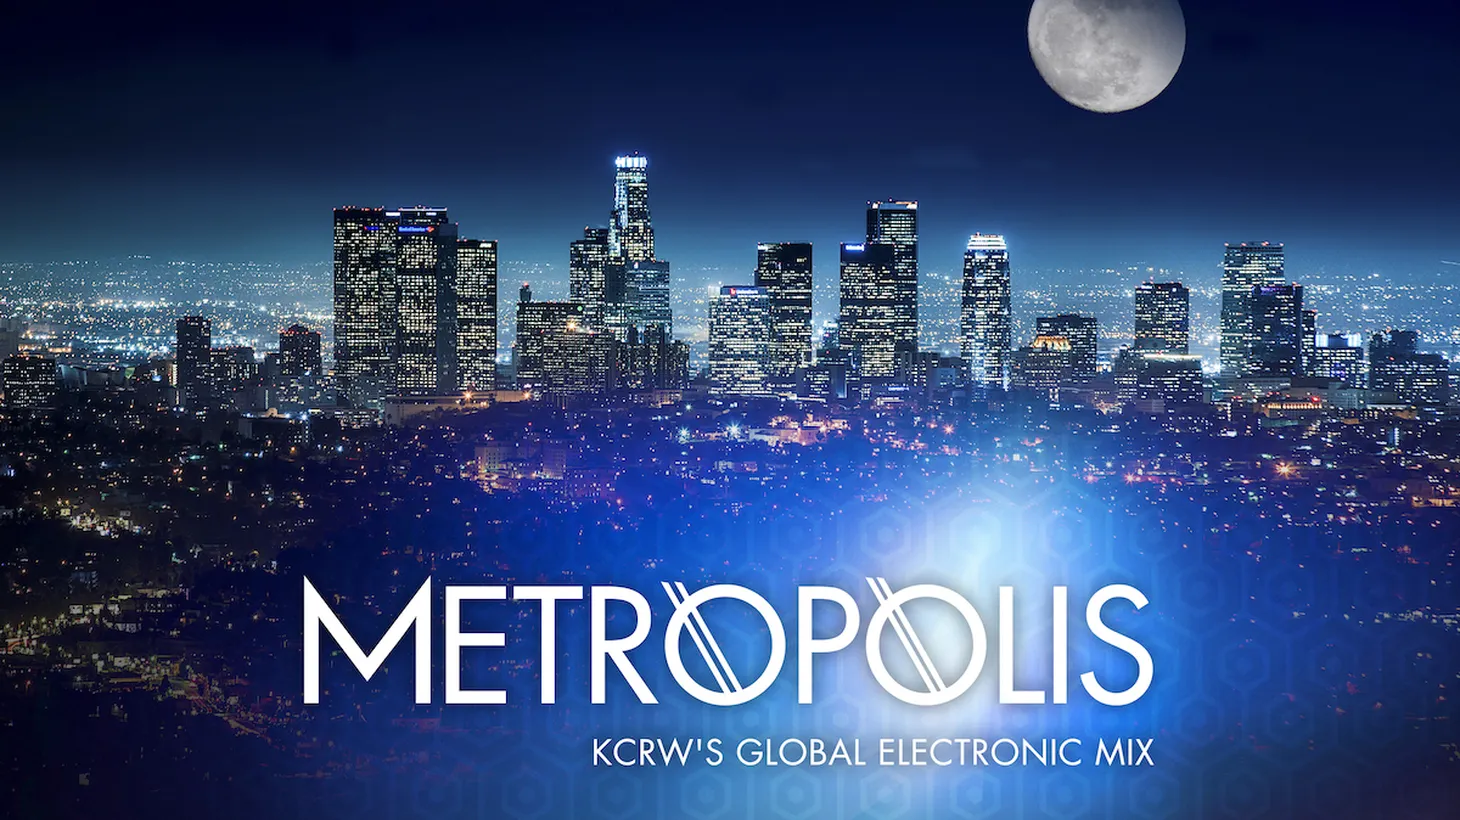 Metropolis playlist, September 4, 2021.